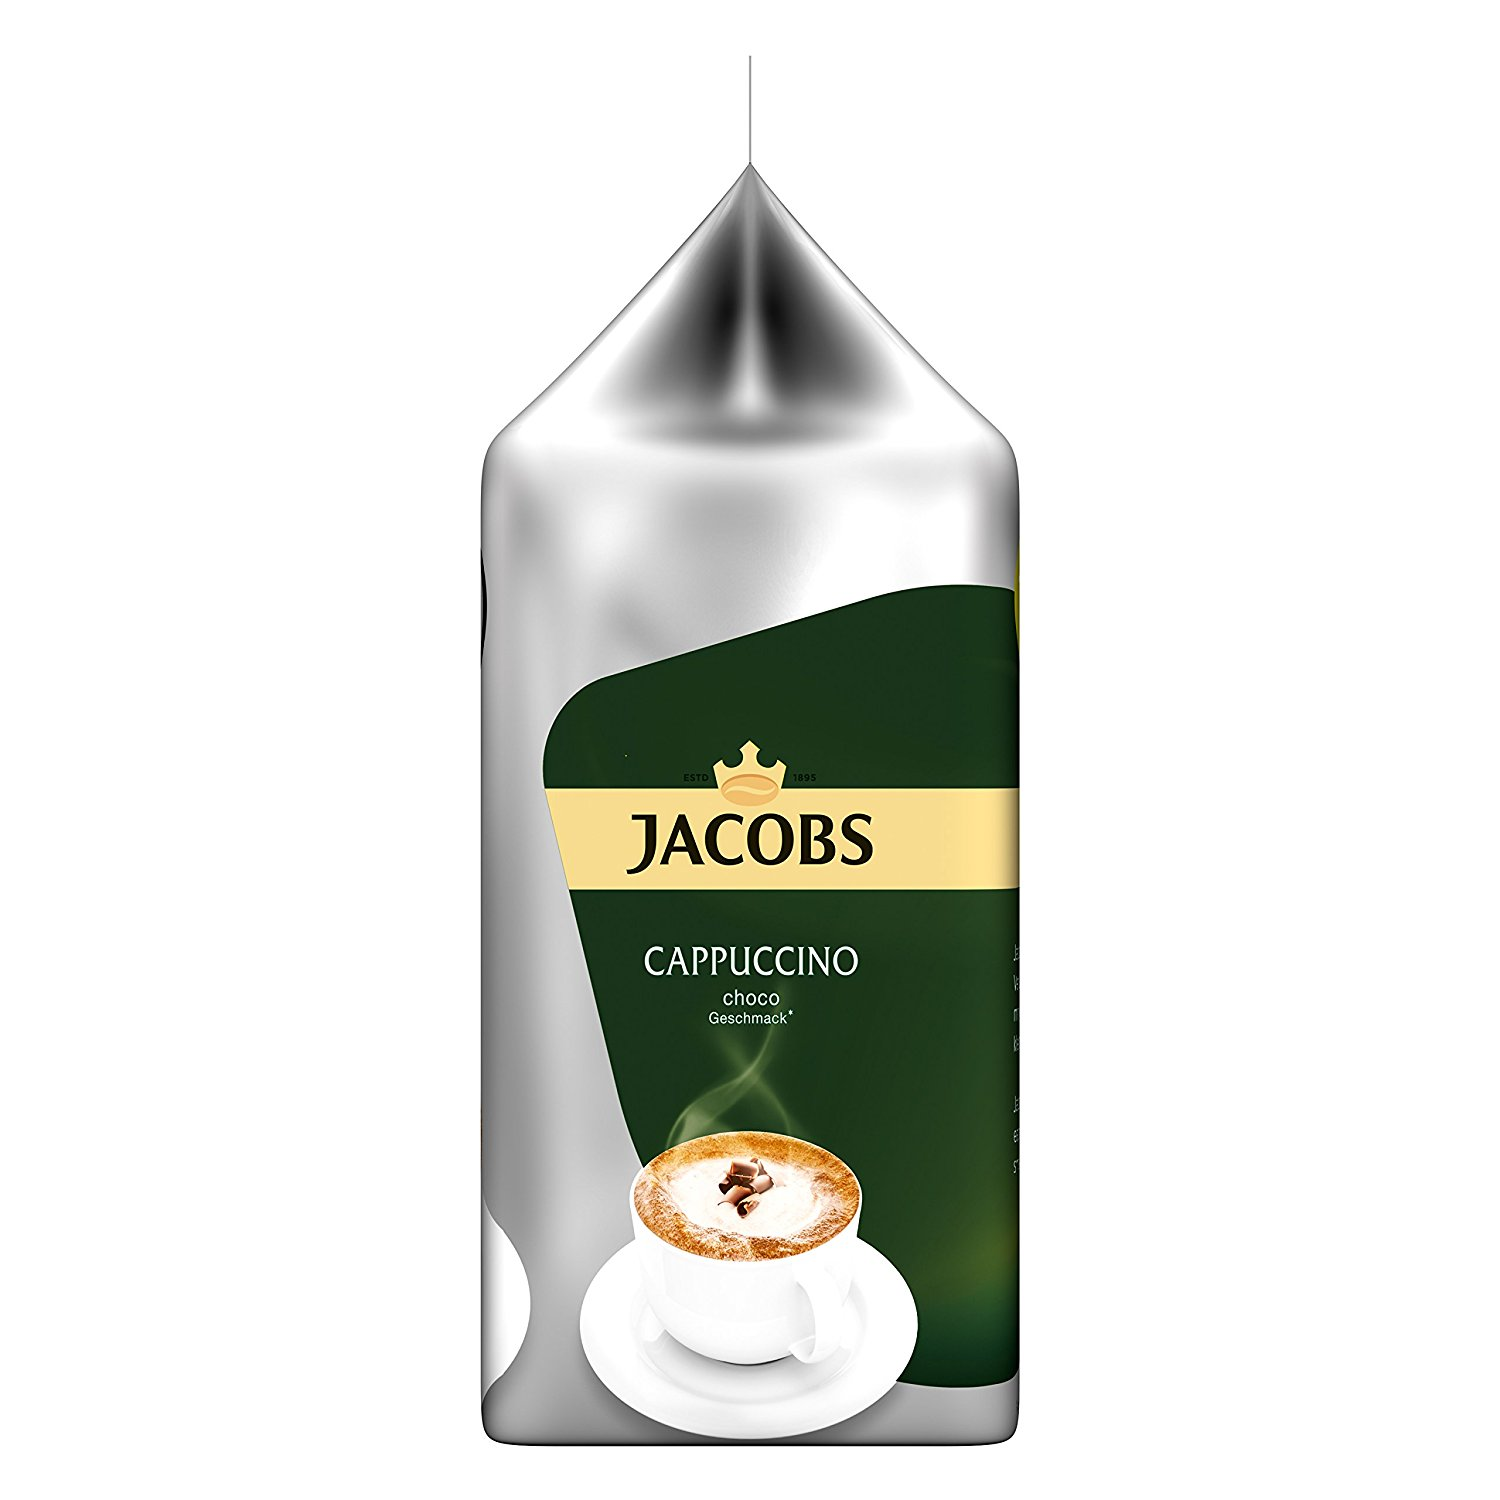 Getränke System)) (Tassimo 8 TASSIMO T Kaffeekapseln Maschine Choco 5 x Jacobs (T-Disc Cappuccino Disc Schokogeschmack